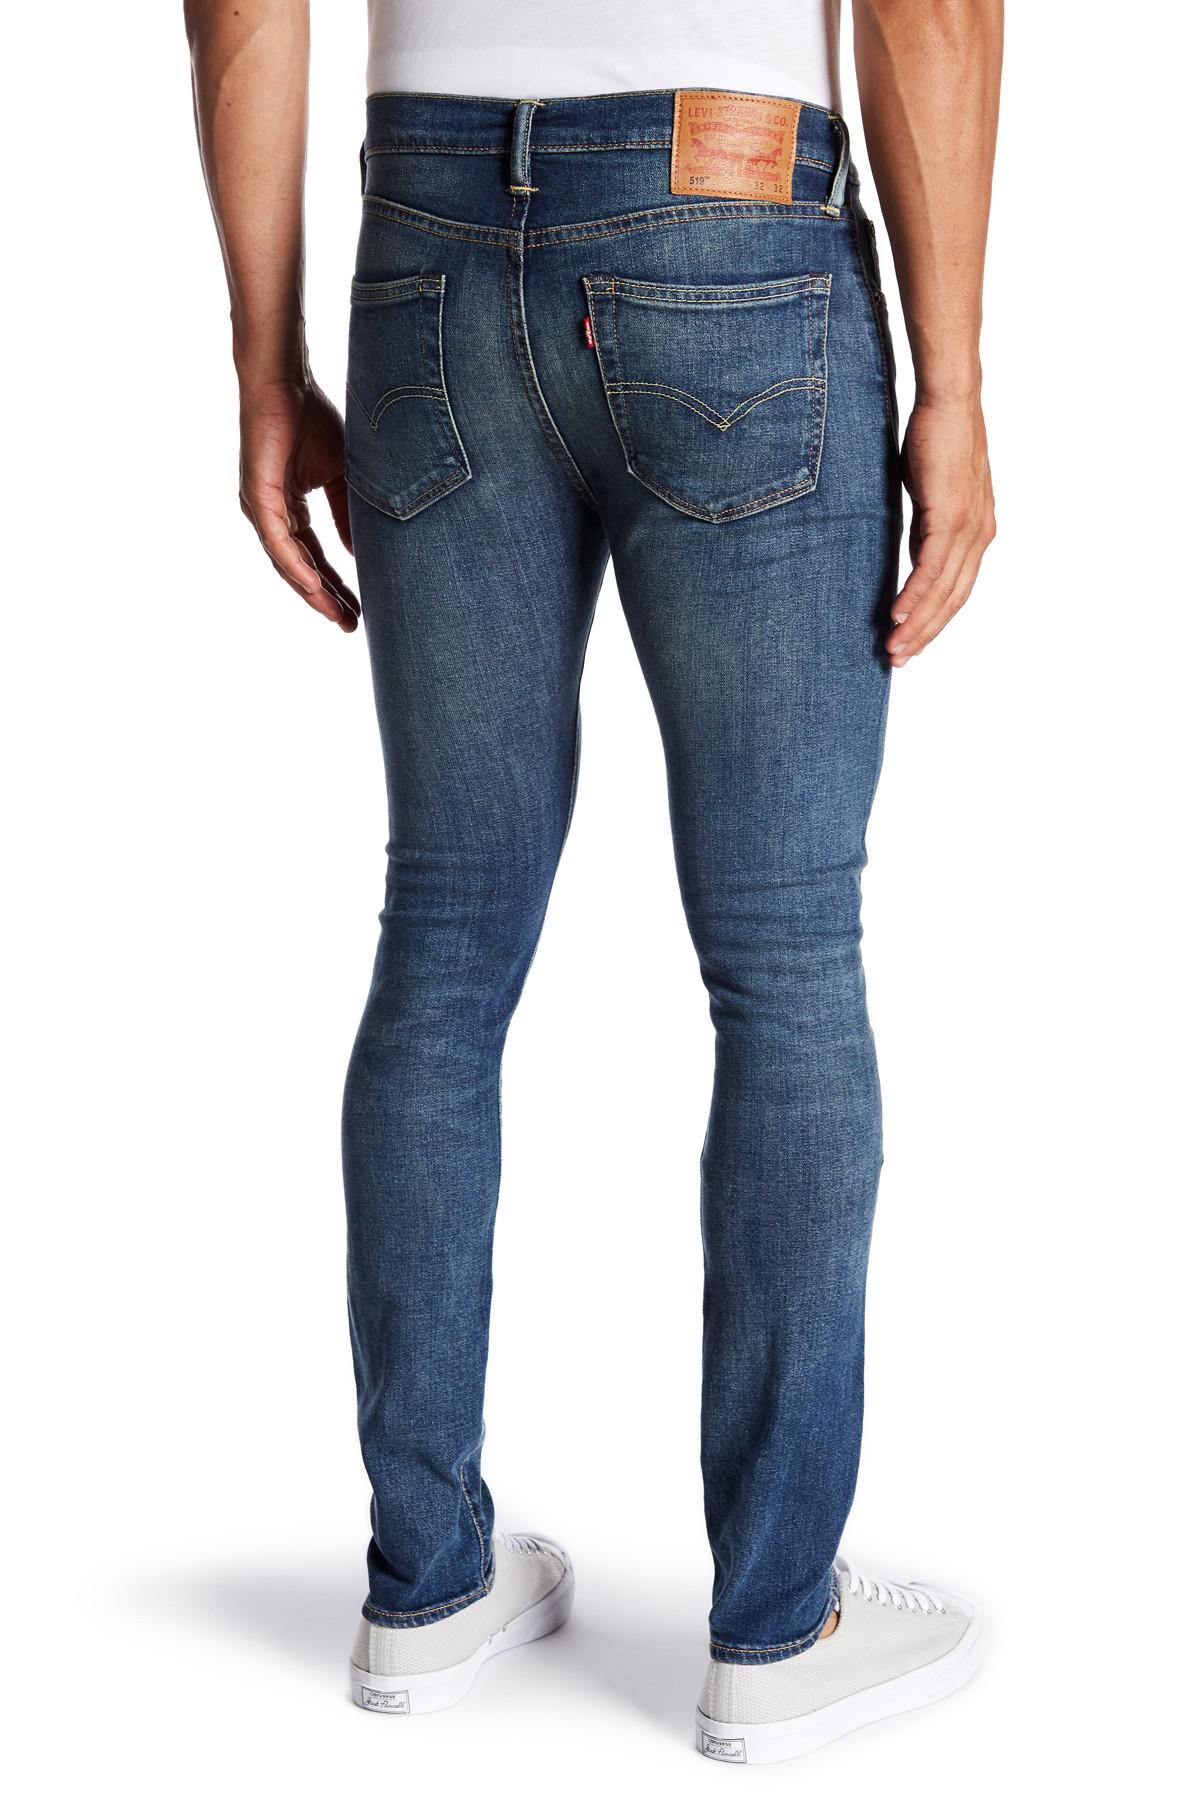 Levi's Denim 519 Extreme Skinny Fit Jeans - 30-32